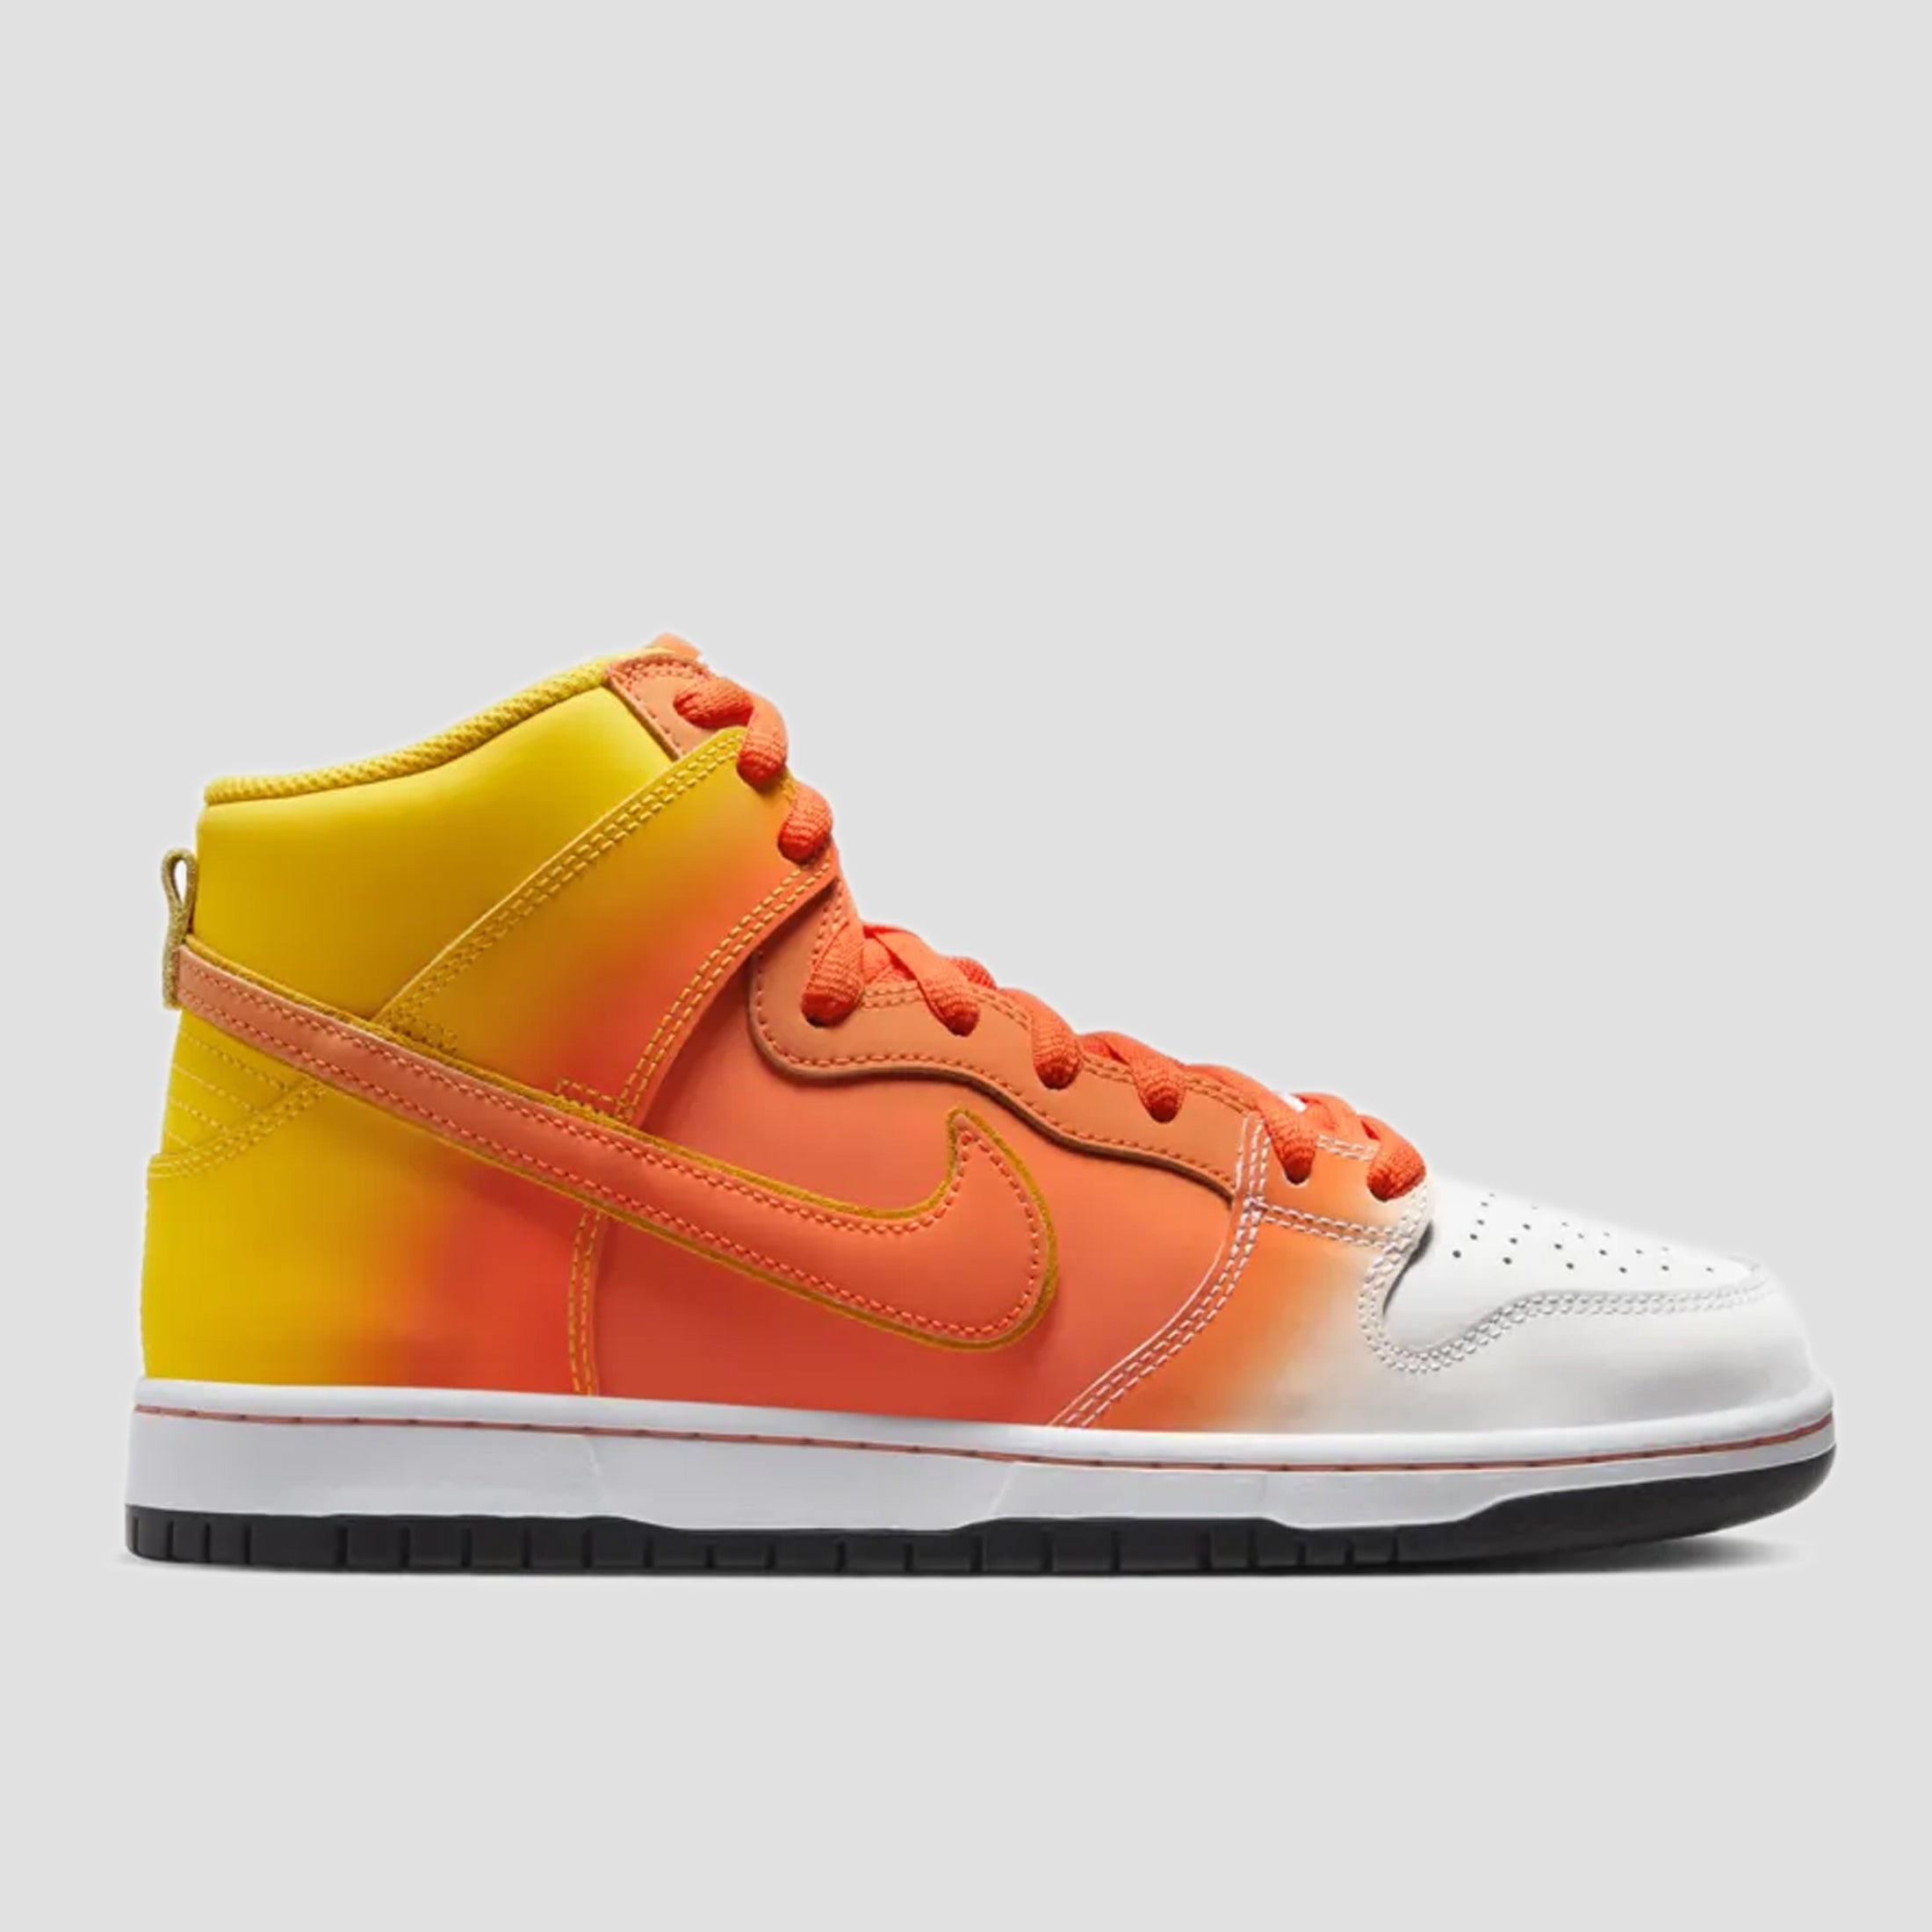 Nike SB Dunk High Pro Skate Shoes Amarillo / Orange / White / Black